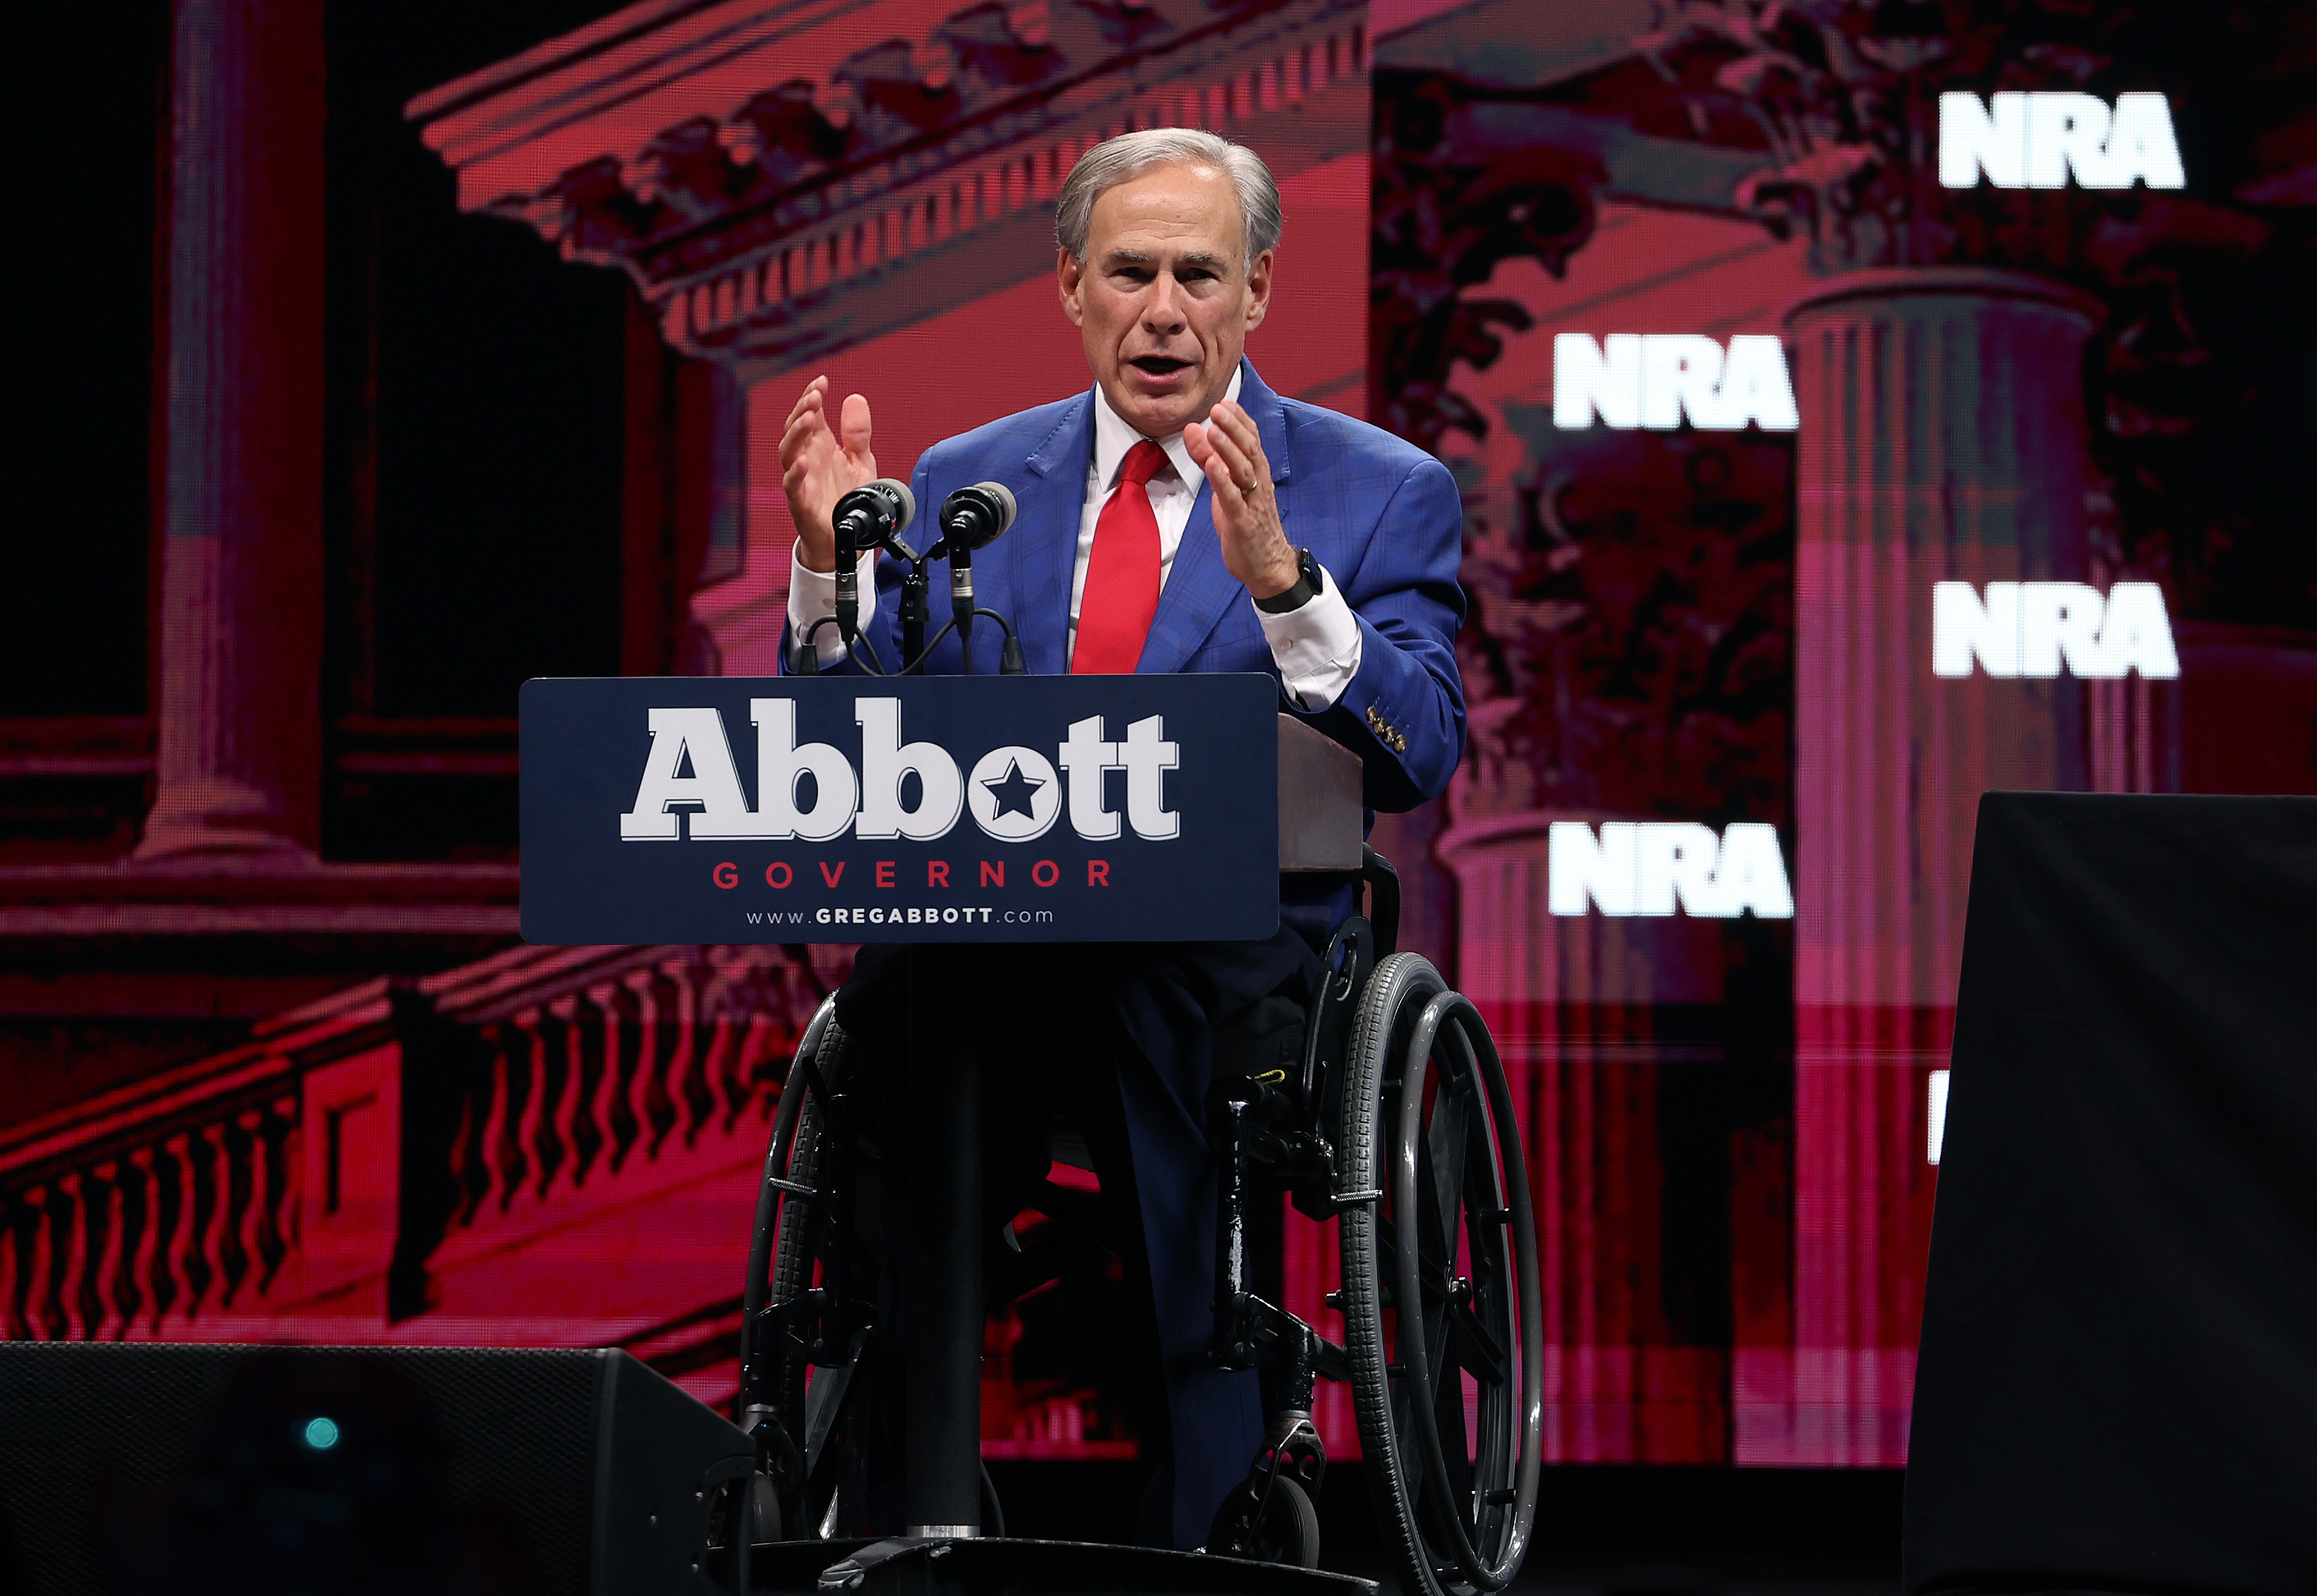 Exodus Alert: Governor Abbott's Warning to Texas Community